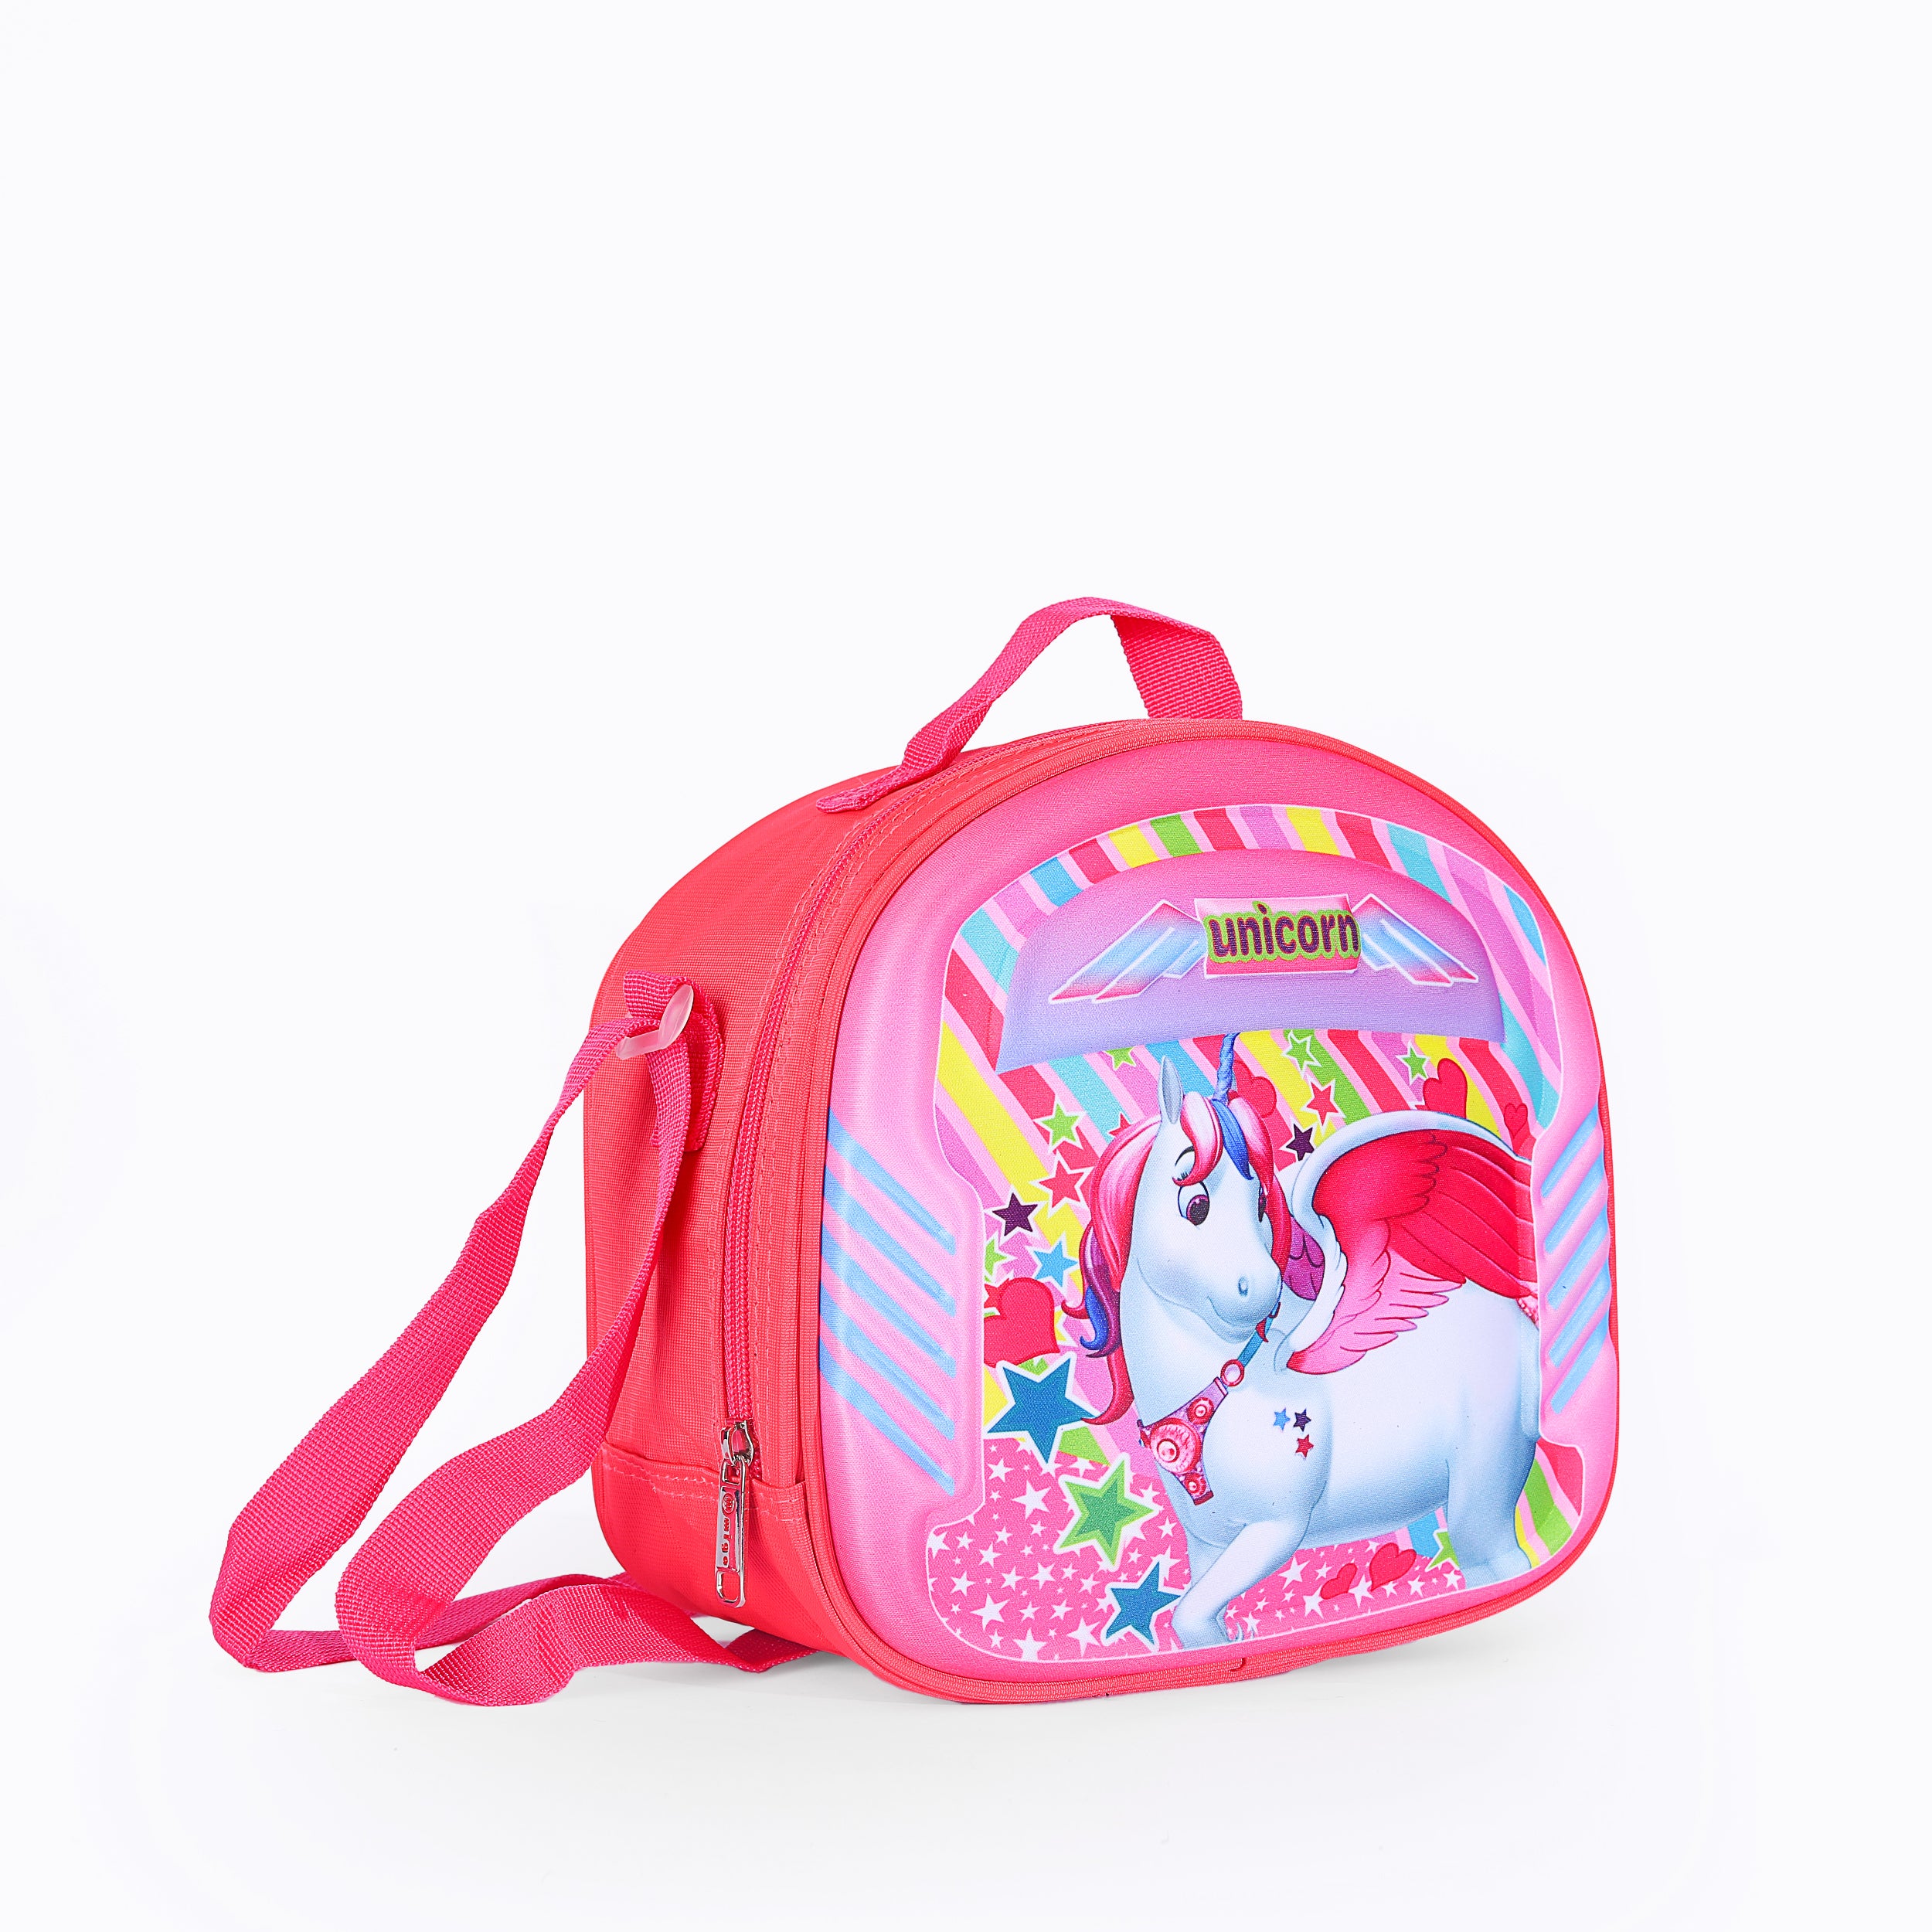 Unicorn Lunch Bag For Girls